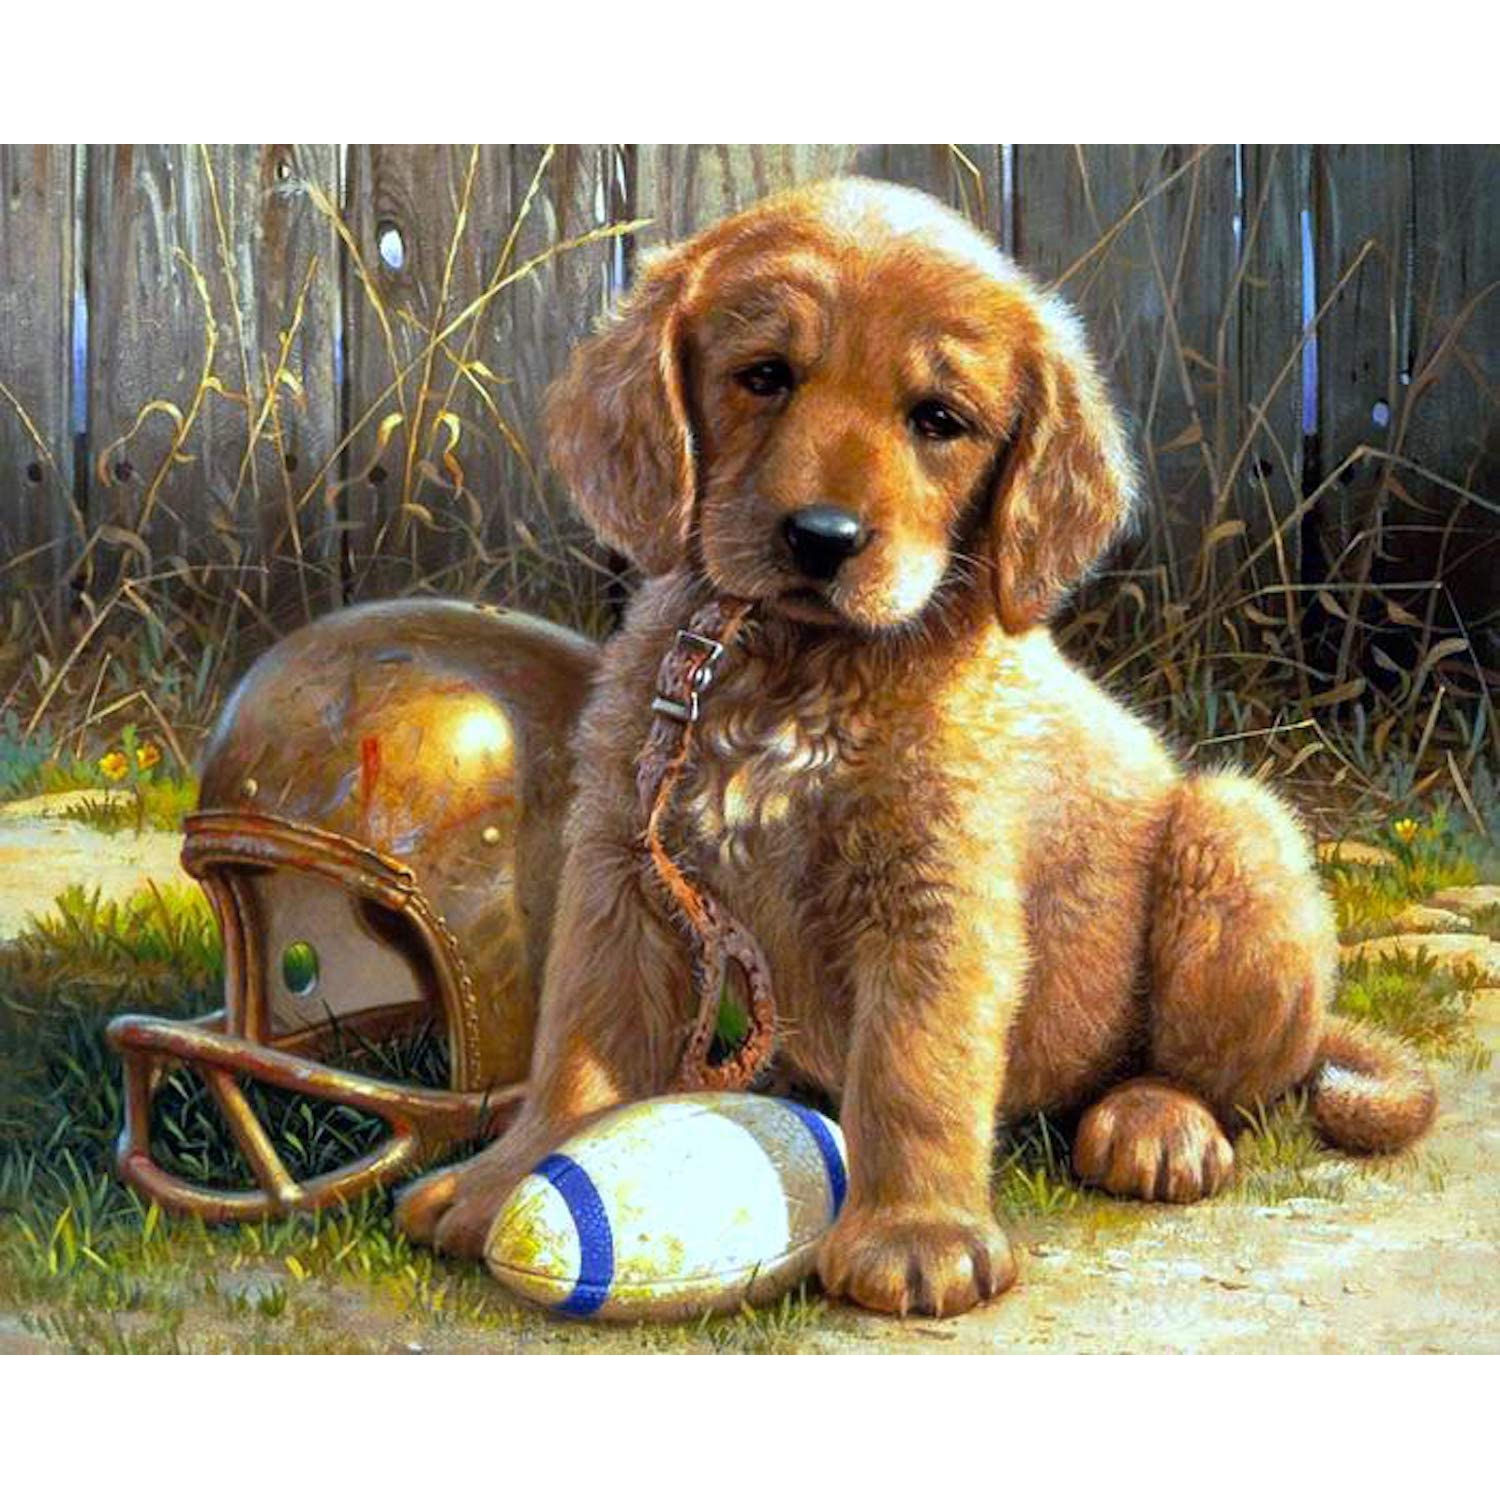 KOTART 5D Diamond Painting Full Drill16x20" Cute Puppy Gemstone Paint Set with Tools, Accessories, Dog DIY Diamond Cross Stit